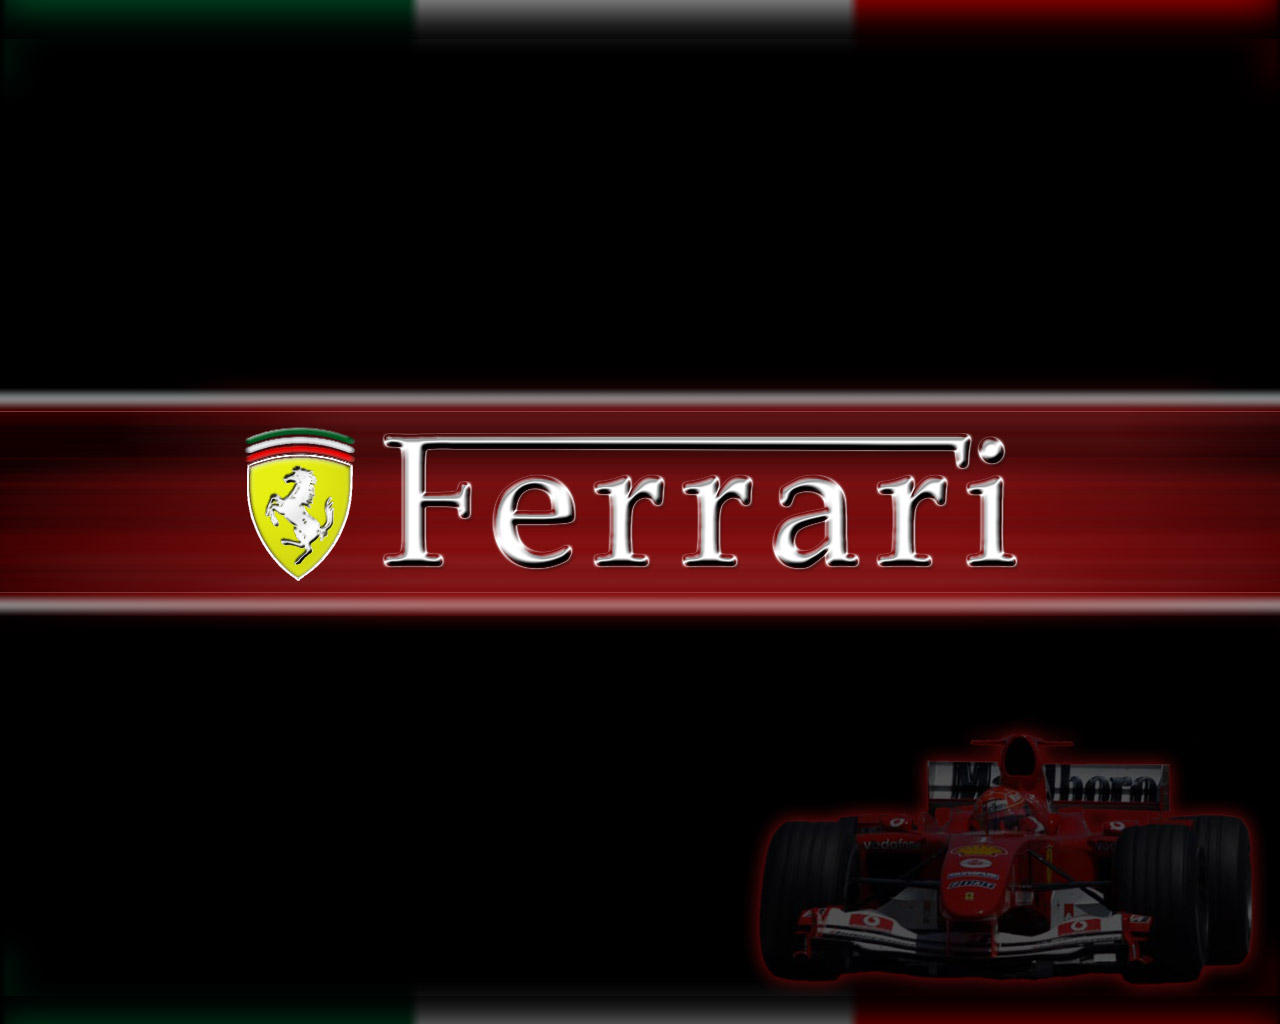 Ferrari F1 by Goatee on